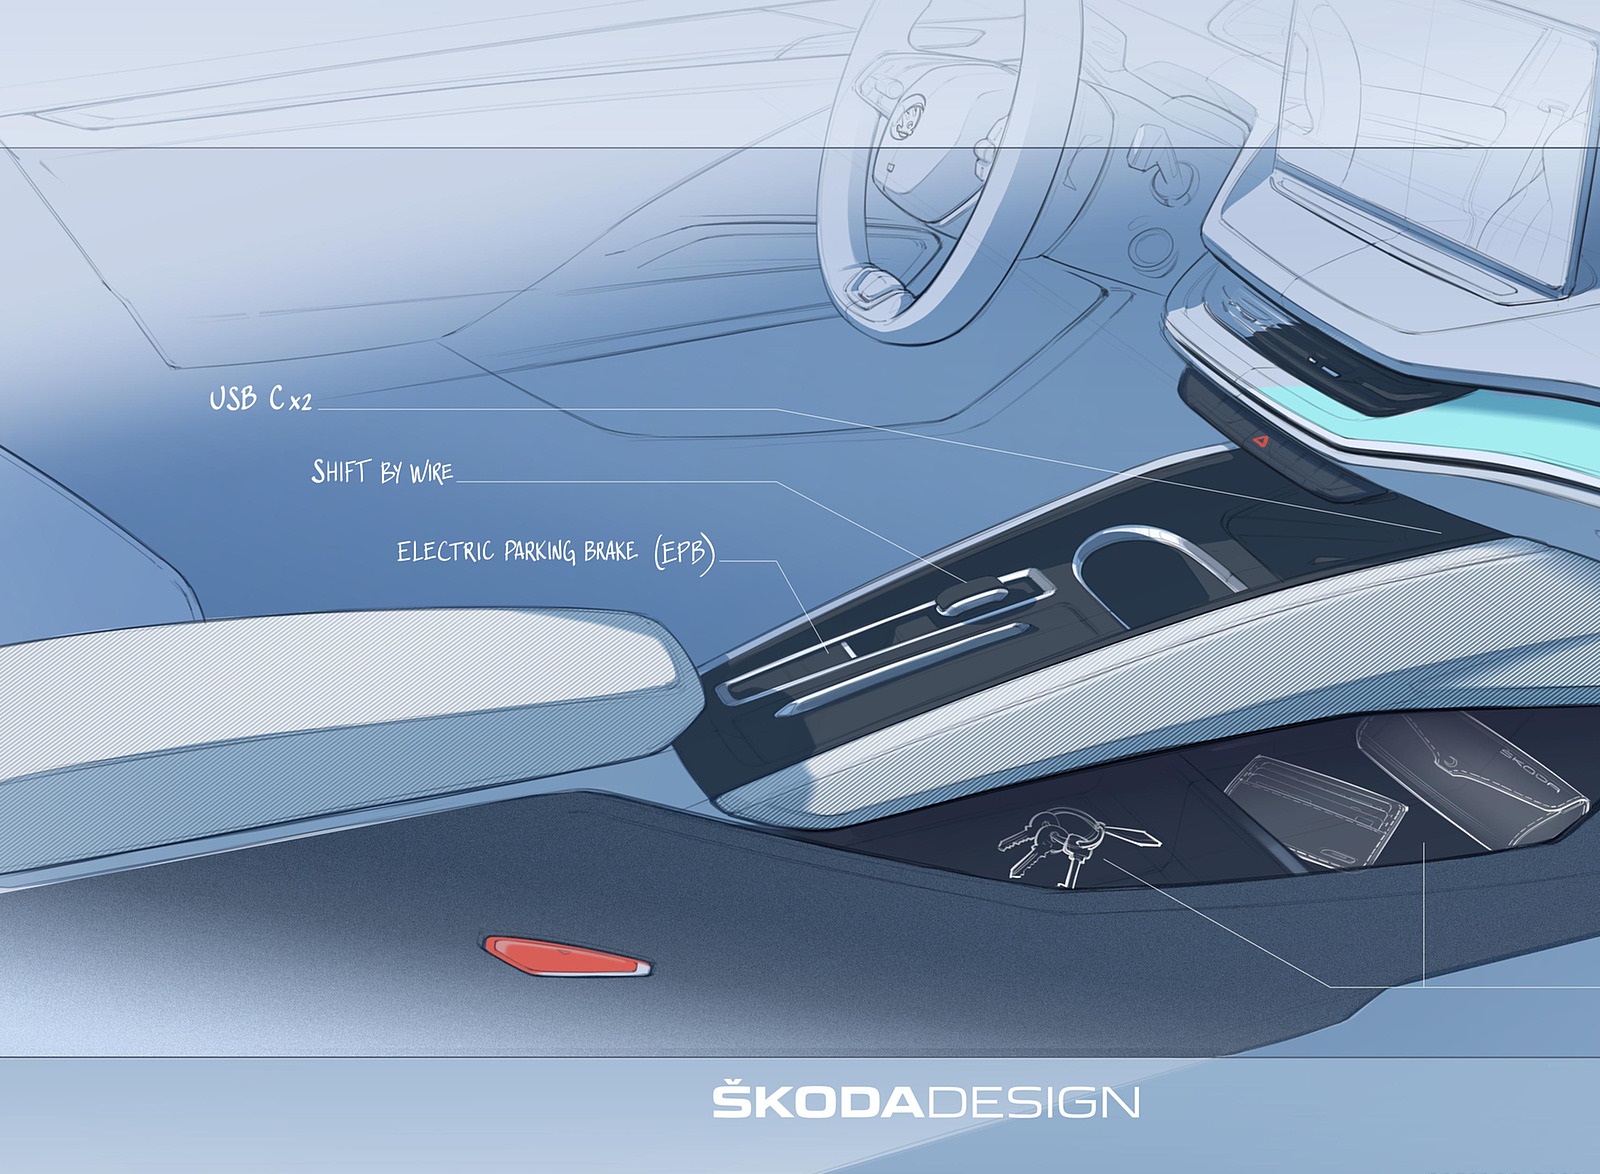 2021 Škoda ENYAQ iV Design Sketch Wallpapers #180 of 184